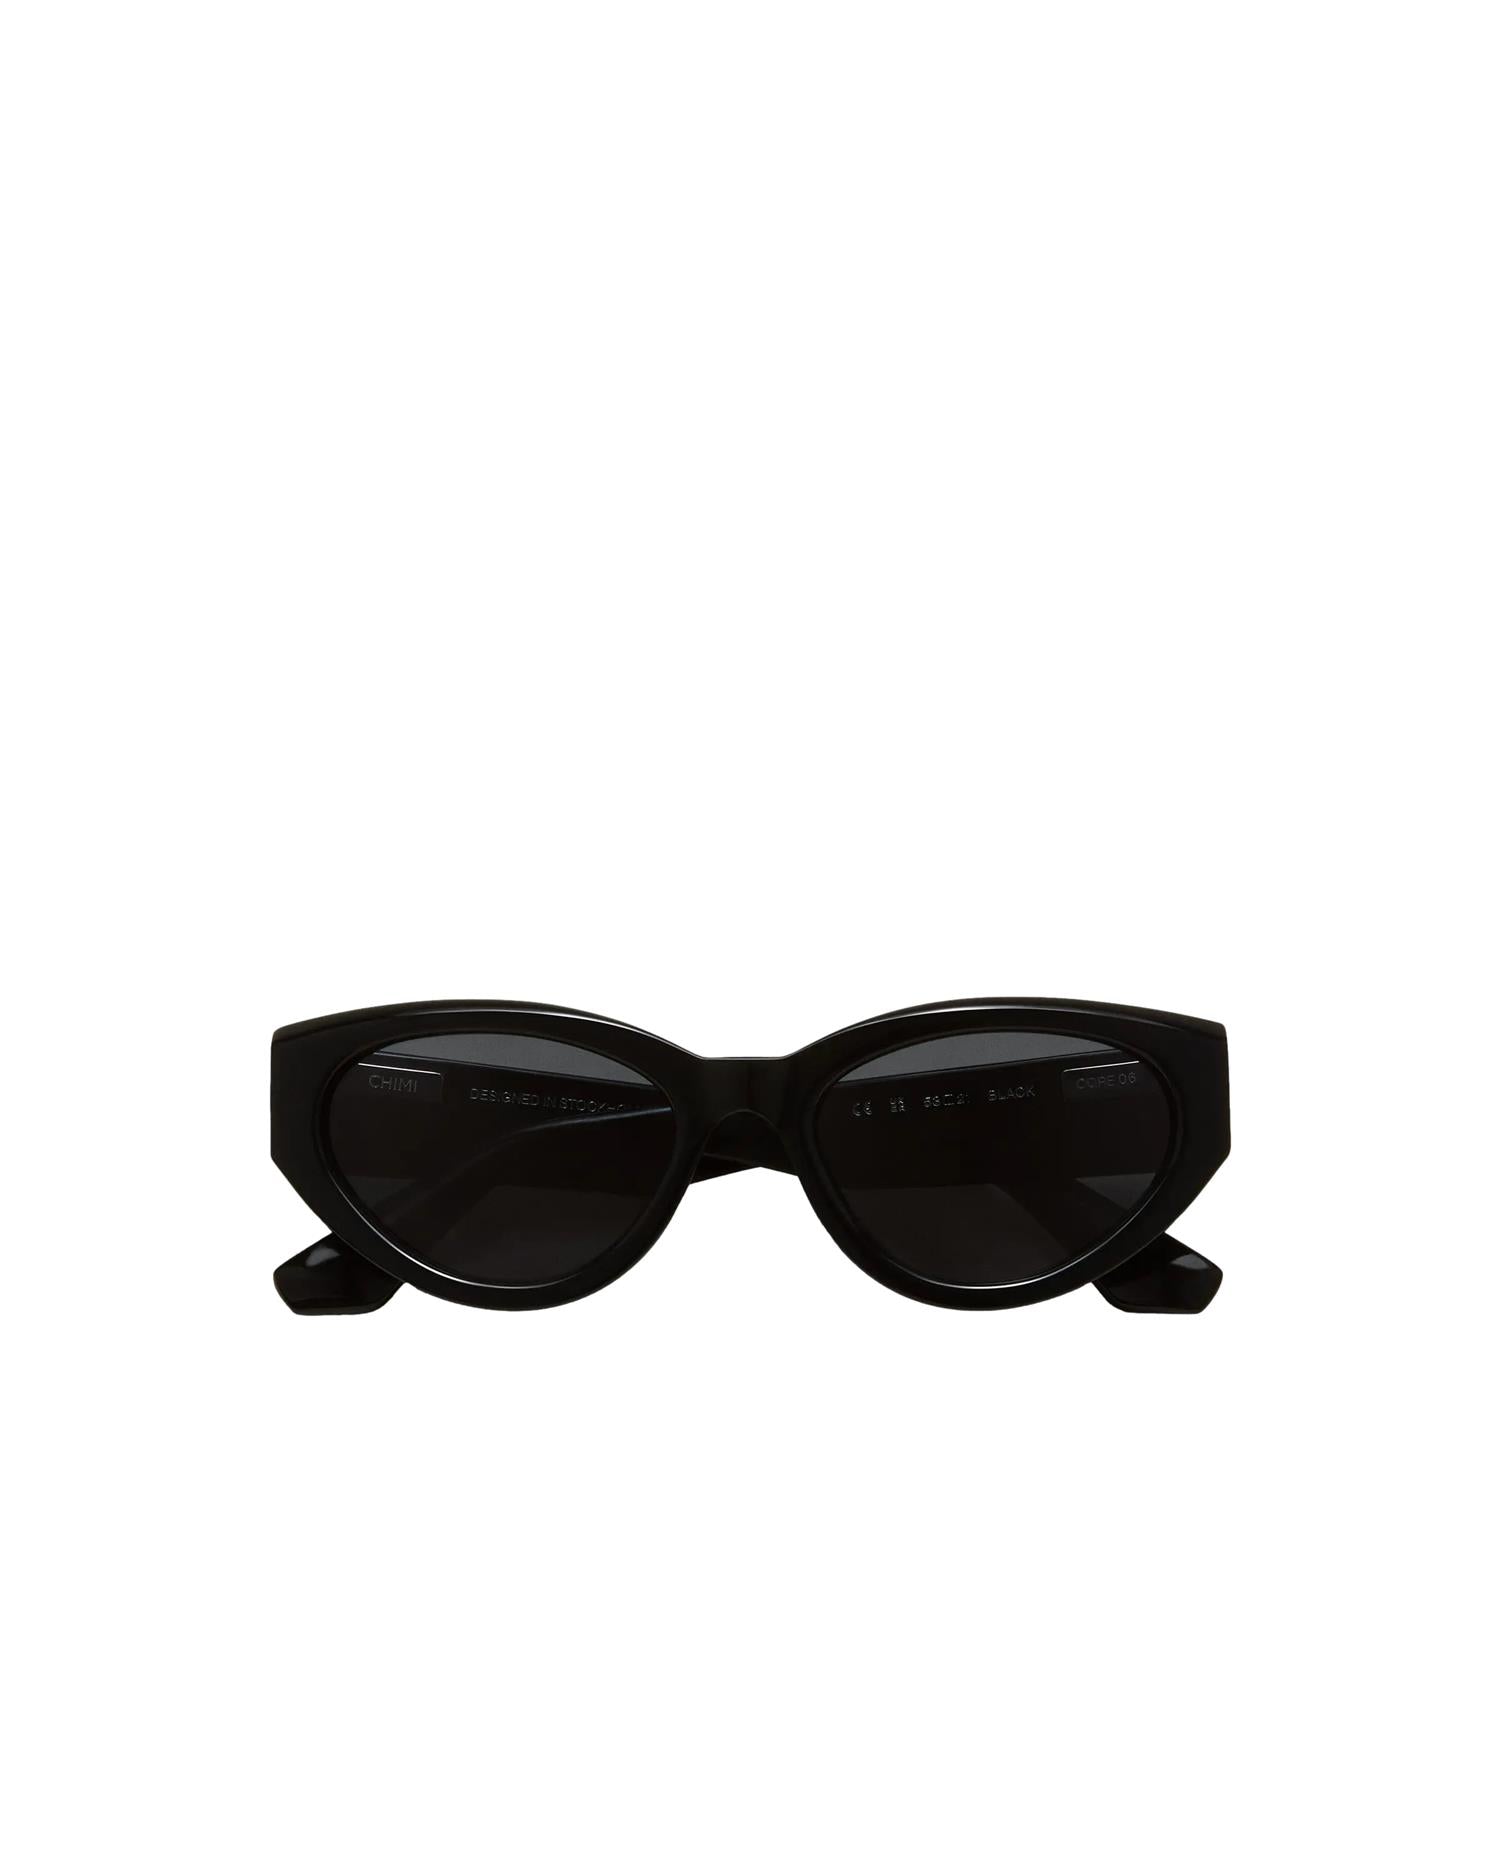 Chimi Eyewear 06 Black Solbriller Sort - modostore.no